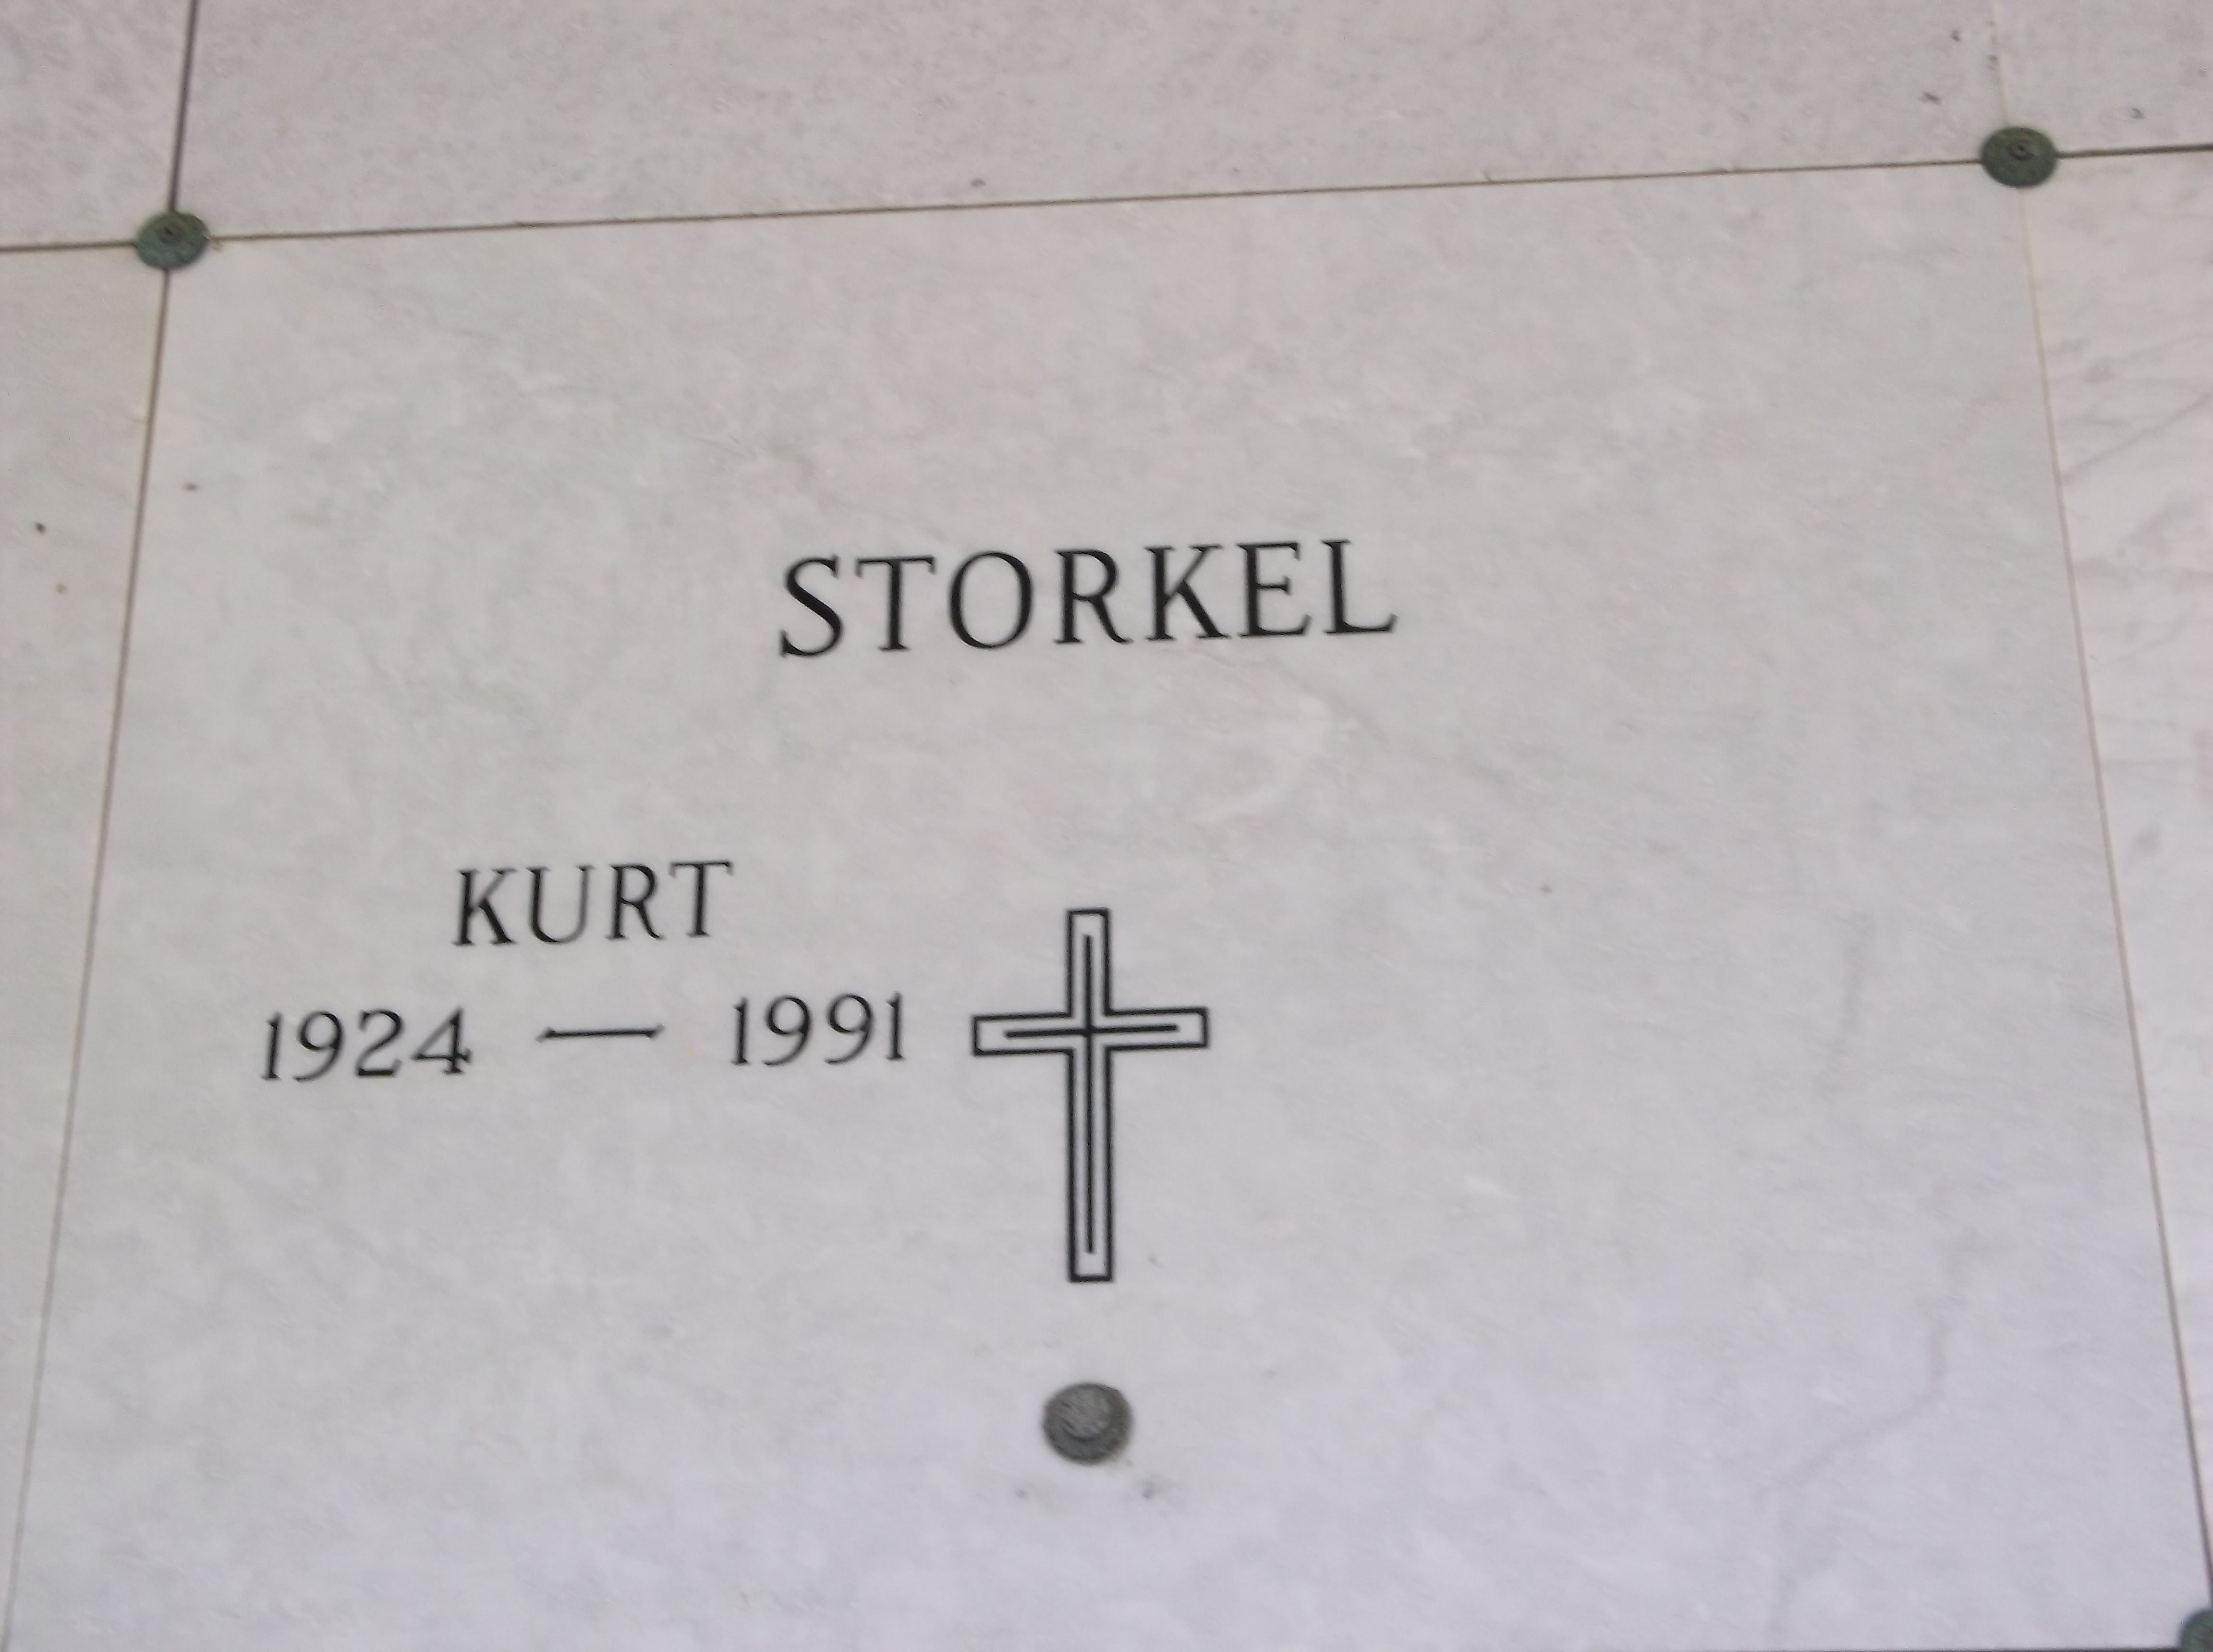 Kurt Storkel